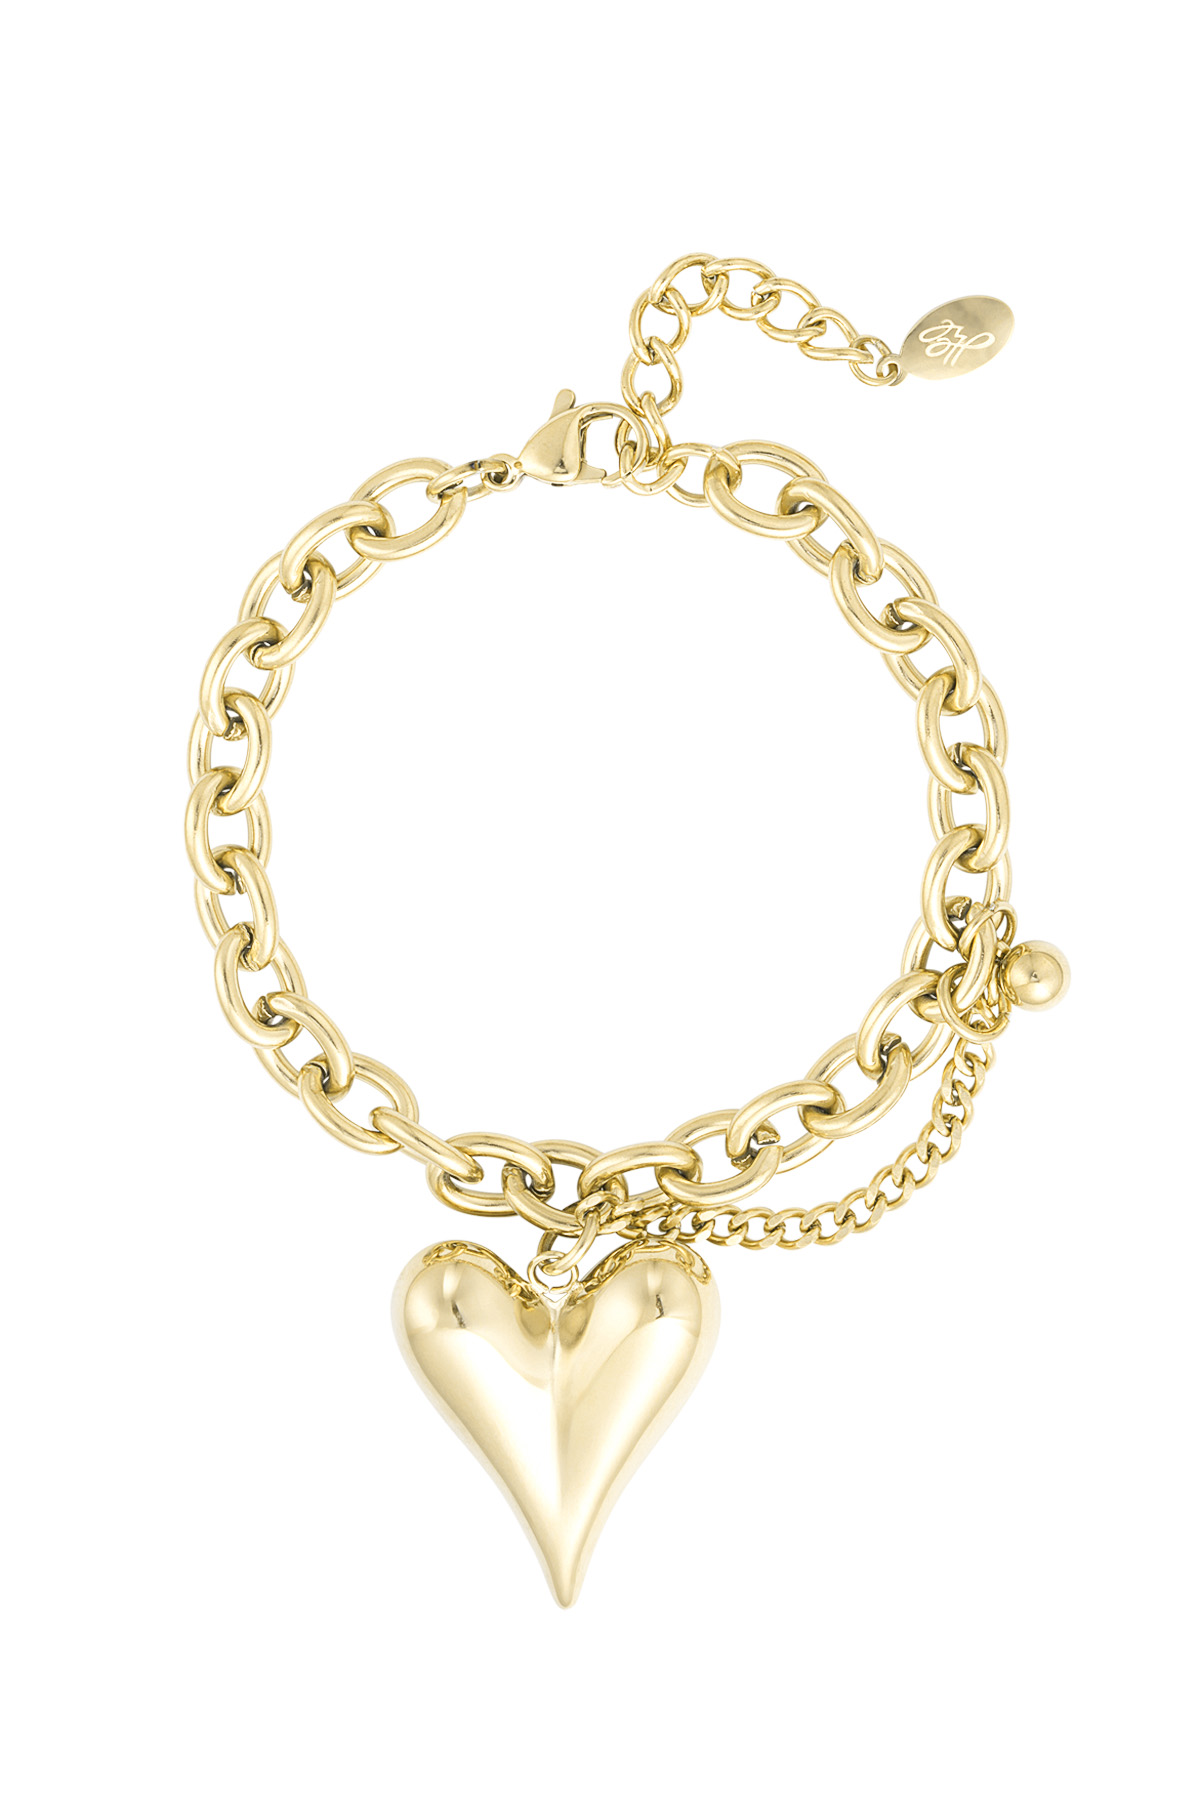 Bracelet love life - gold